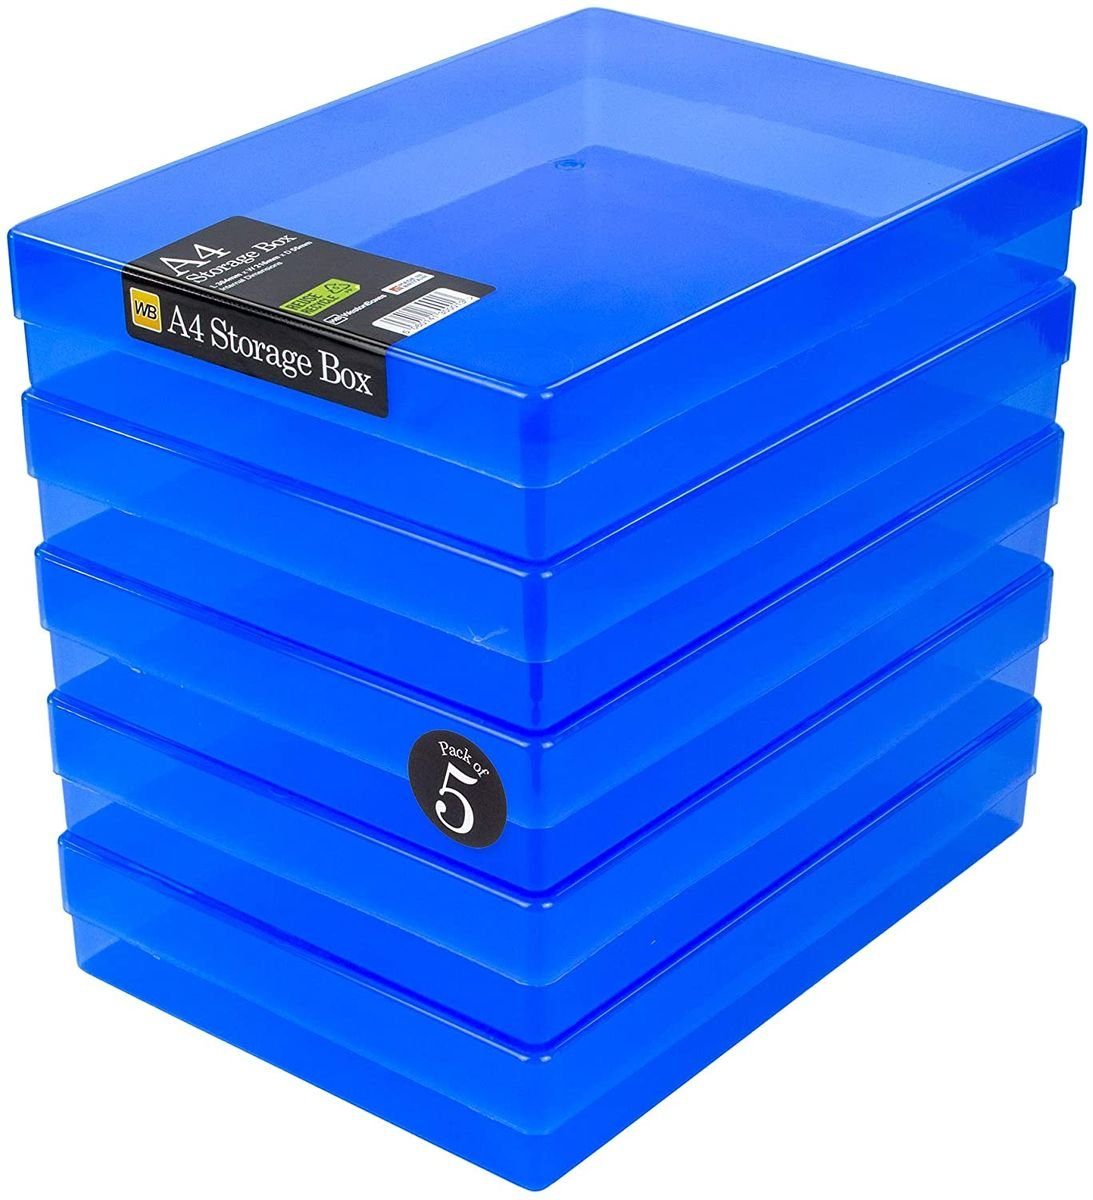 WestonBoxes Aufbewahrungsbox Variocolors A4 Aufbewahrungsbox blau transparent 312x225x57mm